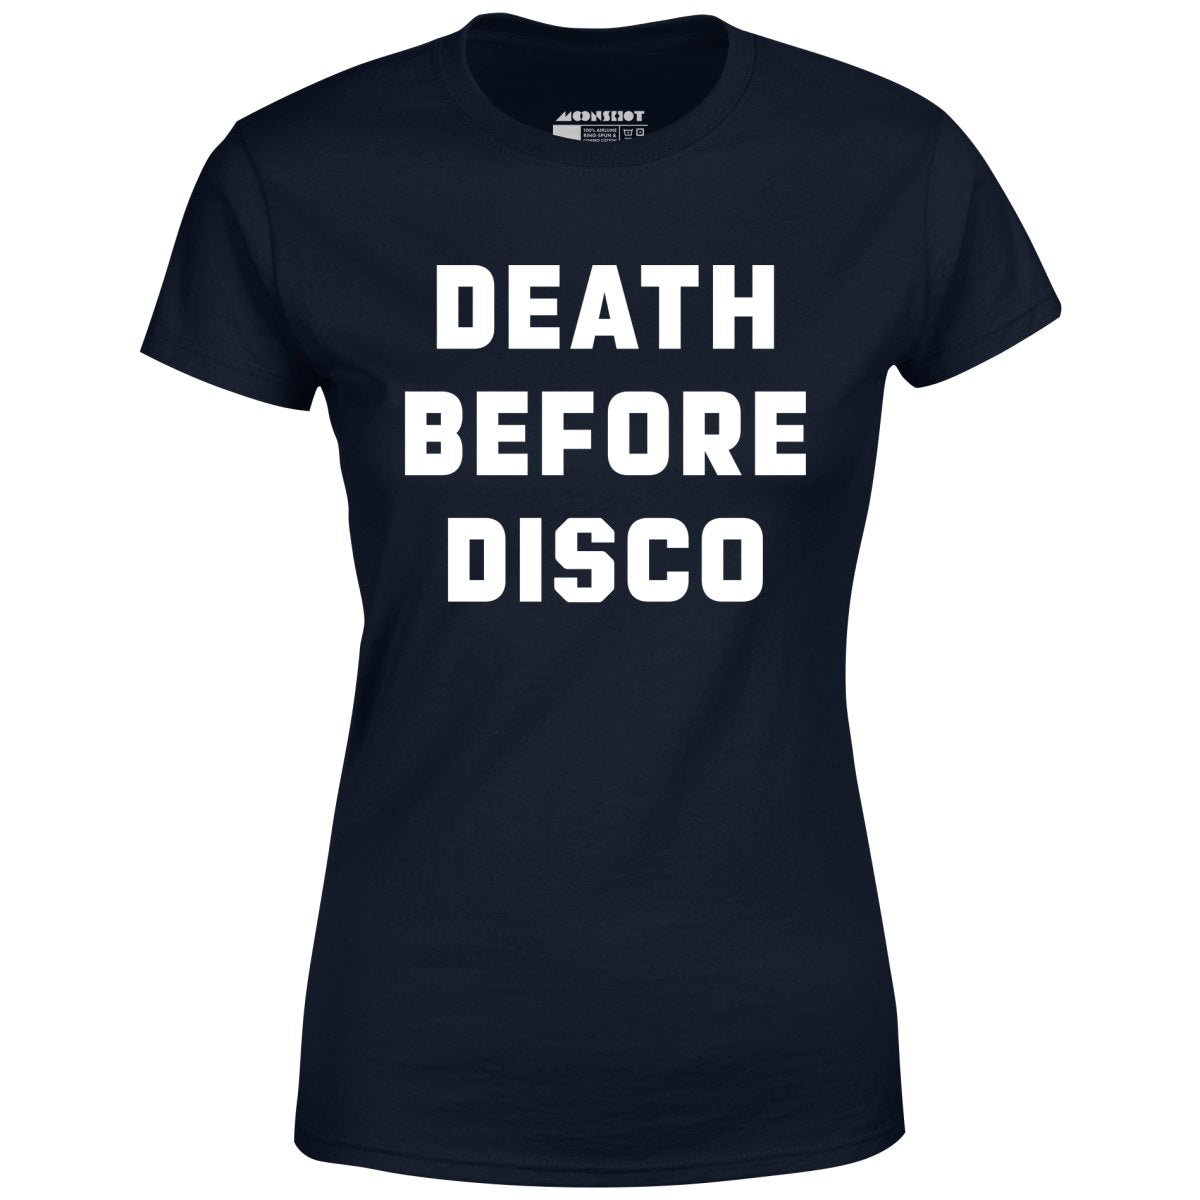 Death Before Disco - Women's T-Shirt